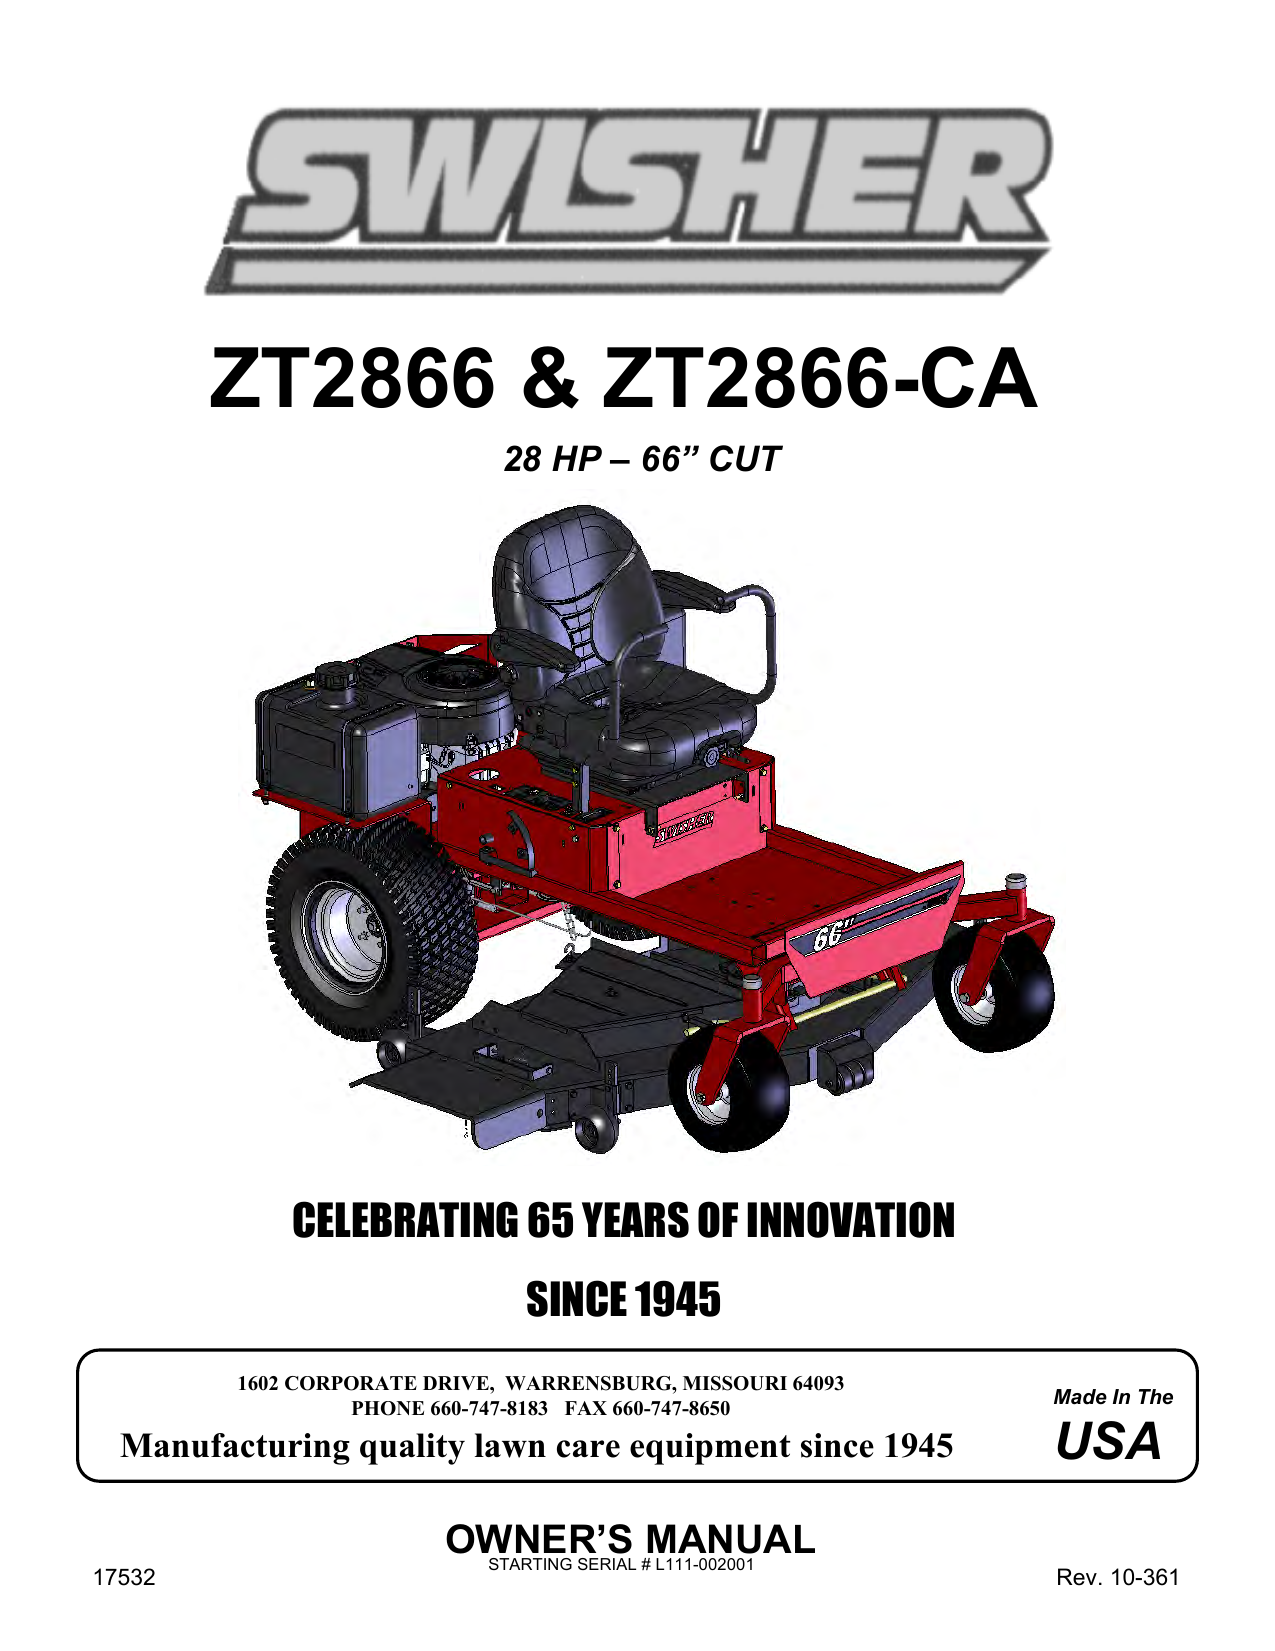 Swisher Zt2866 Zero Turn Riding Mower Owner Manual Manualzz 